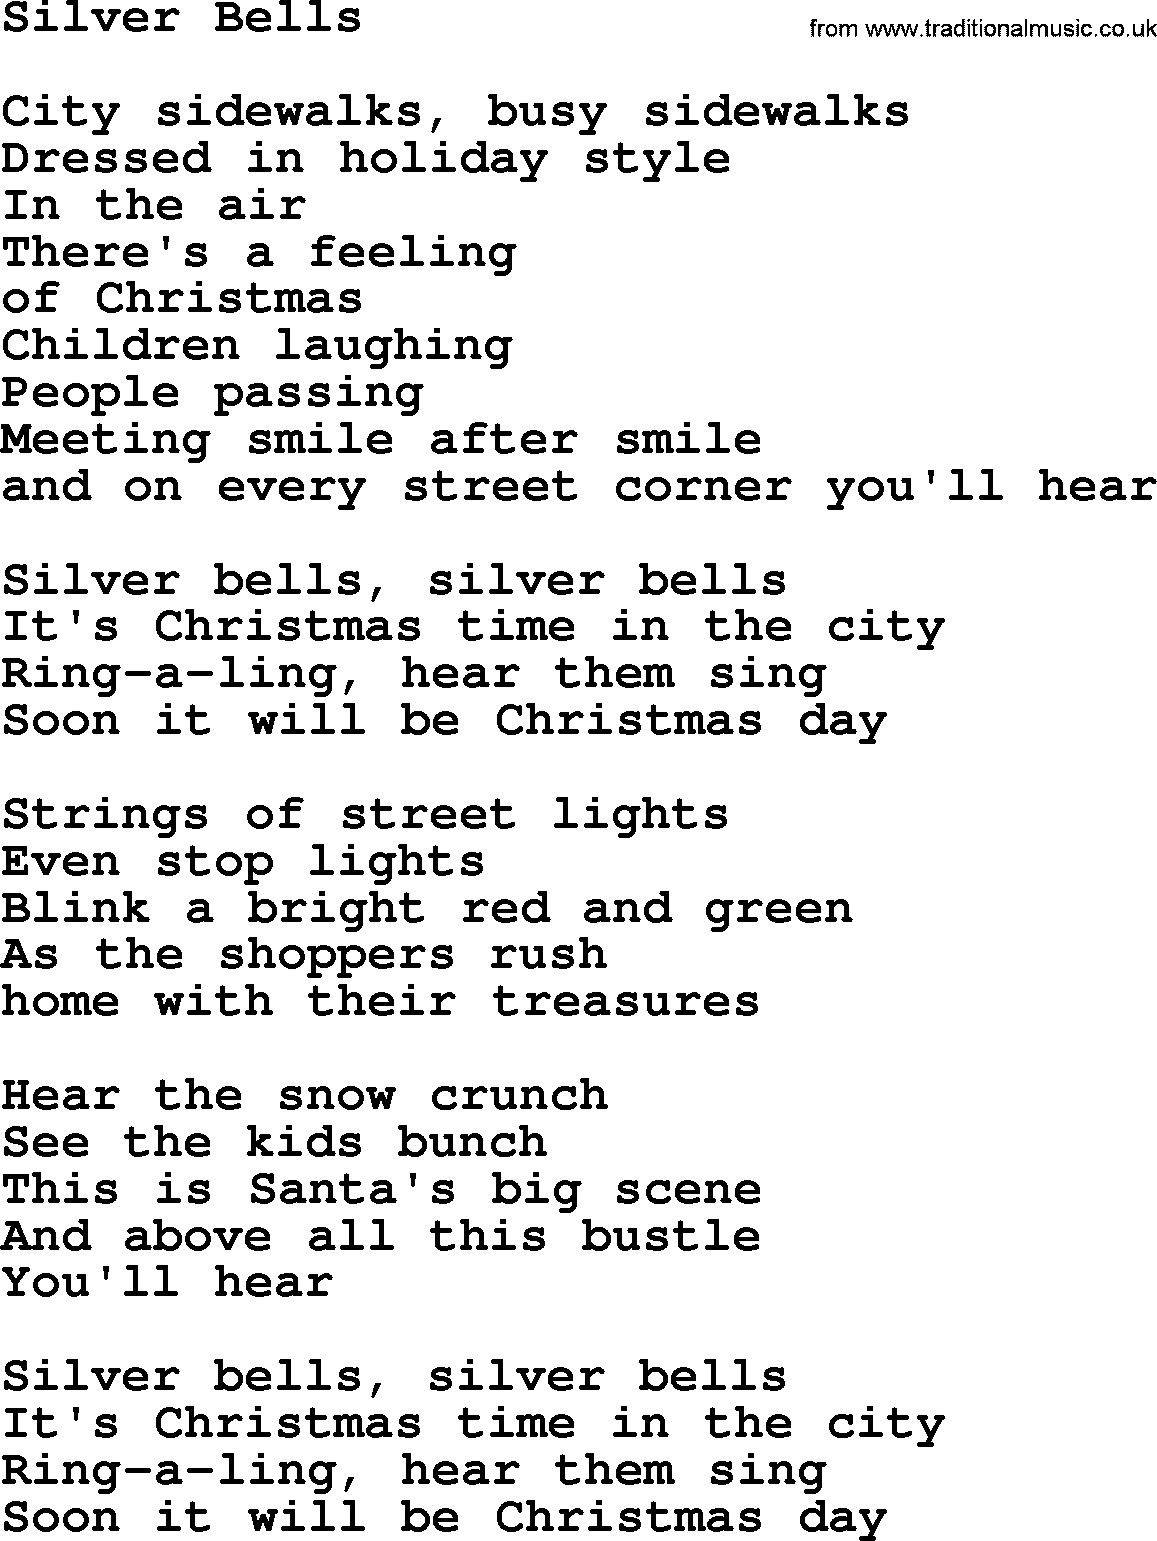 The Byrds song Silver Bells, lyrics